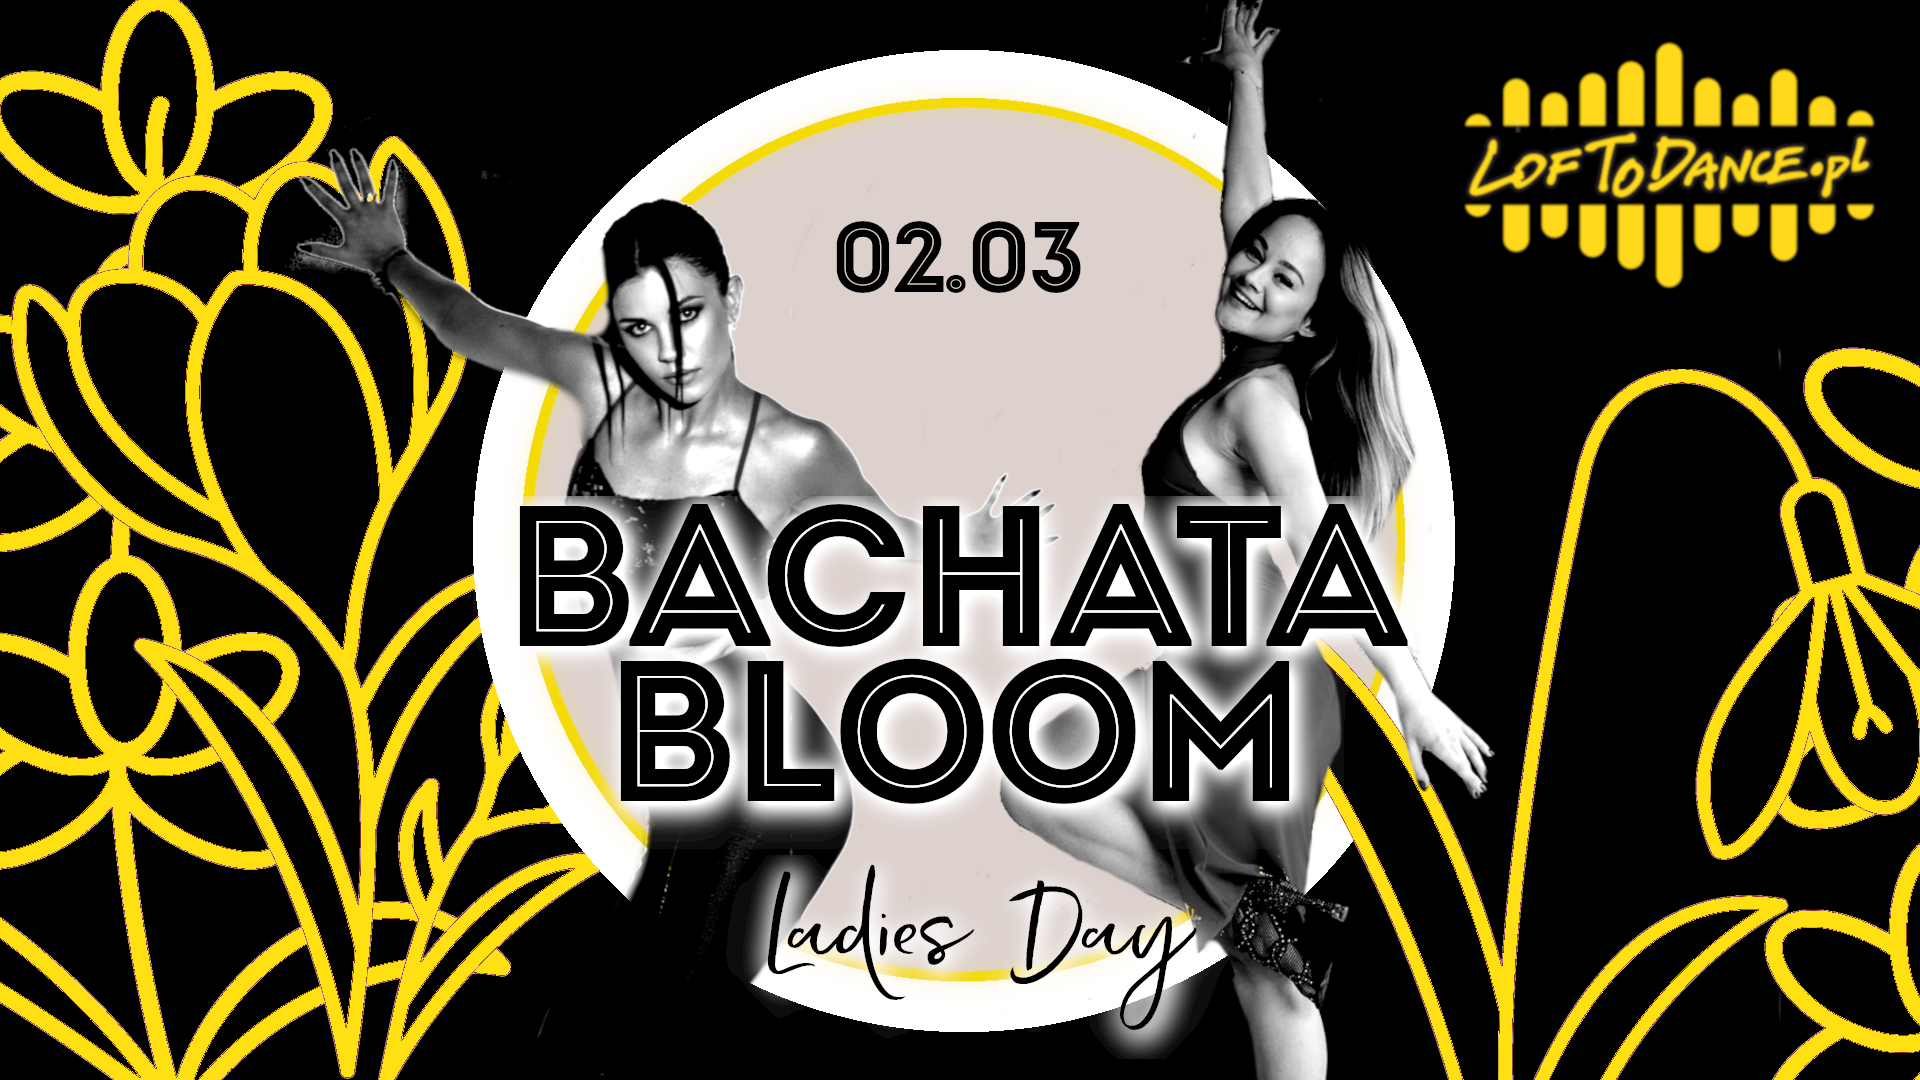 Bachata Bloom - sklep Loftodance